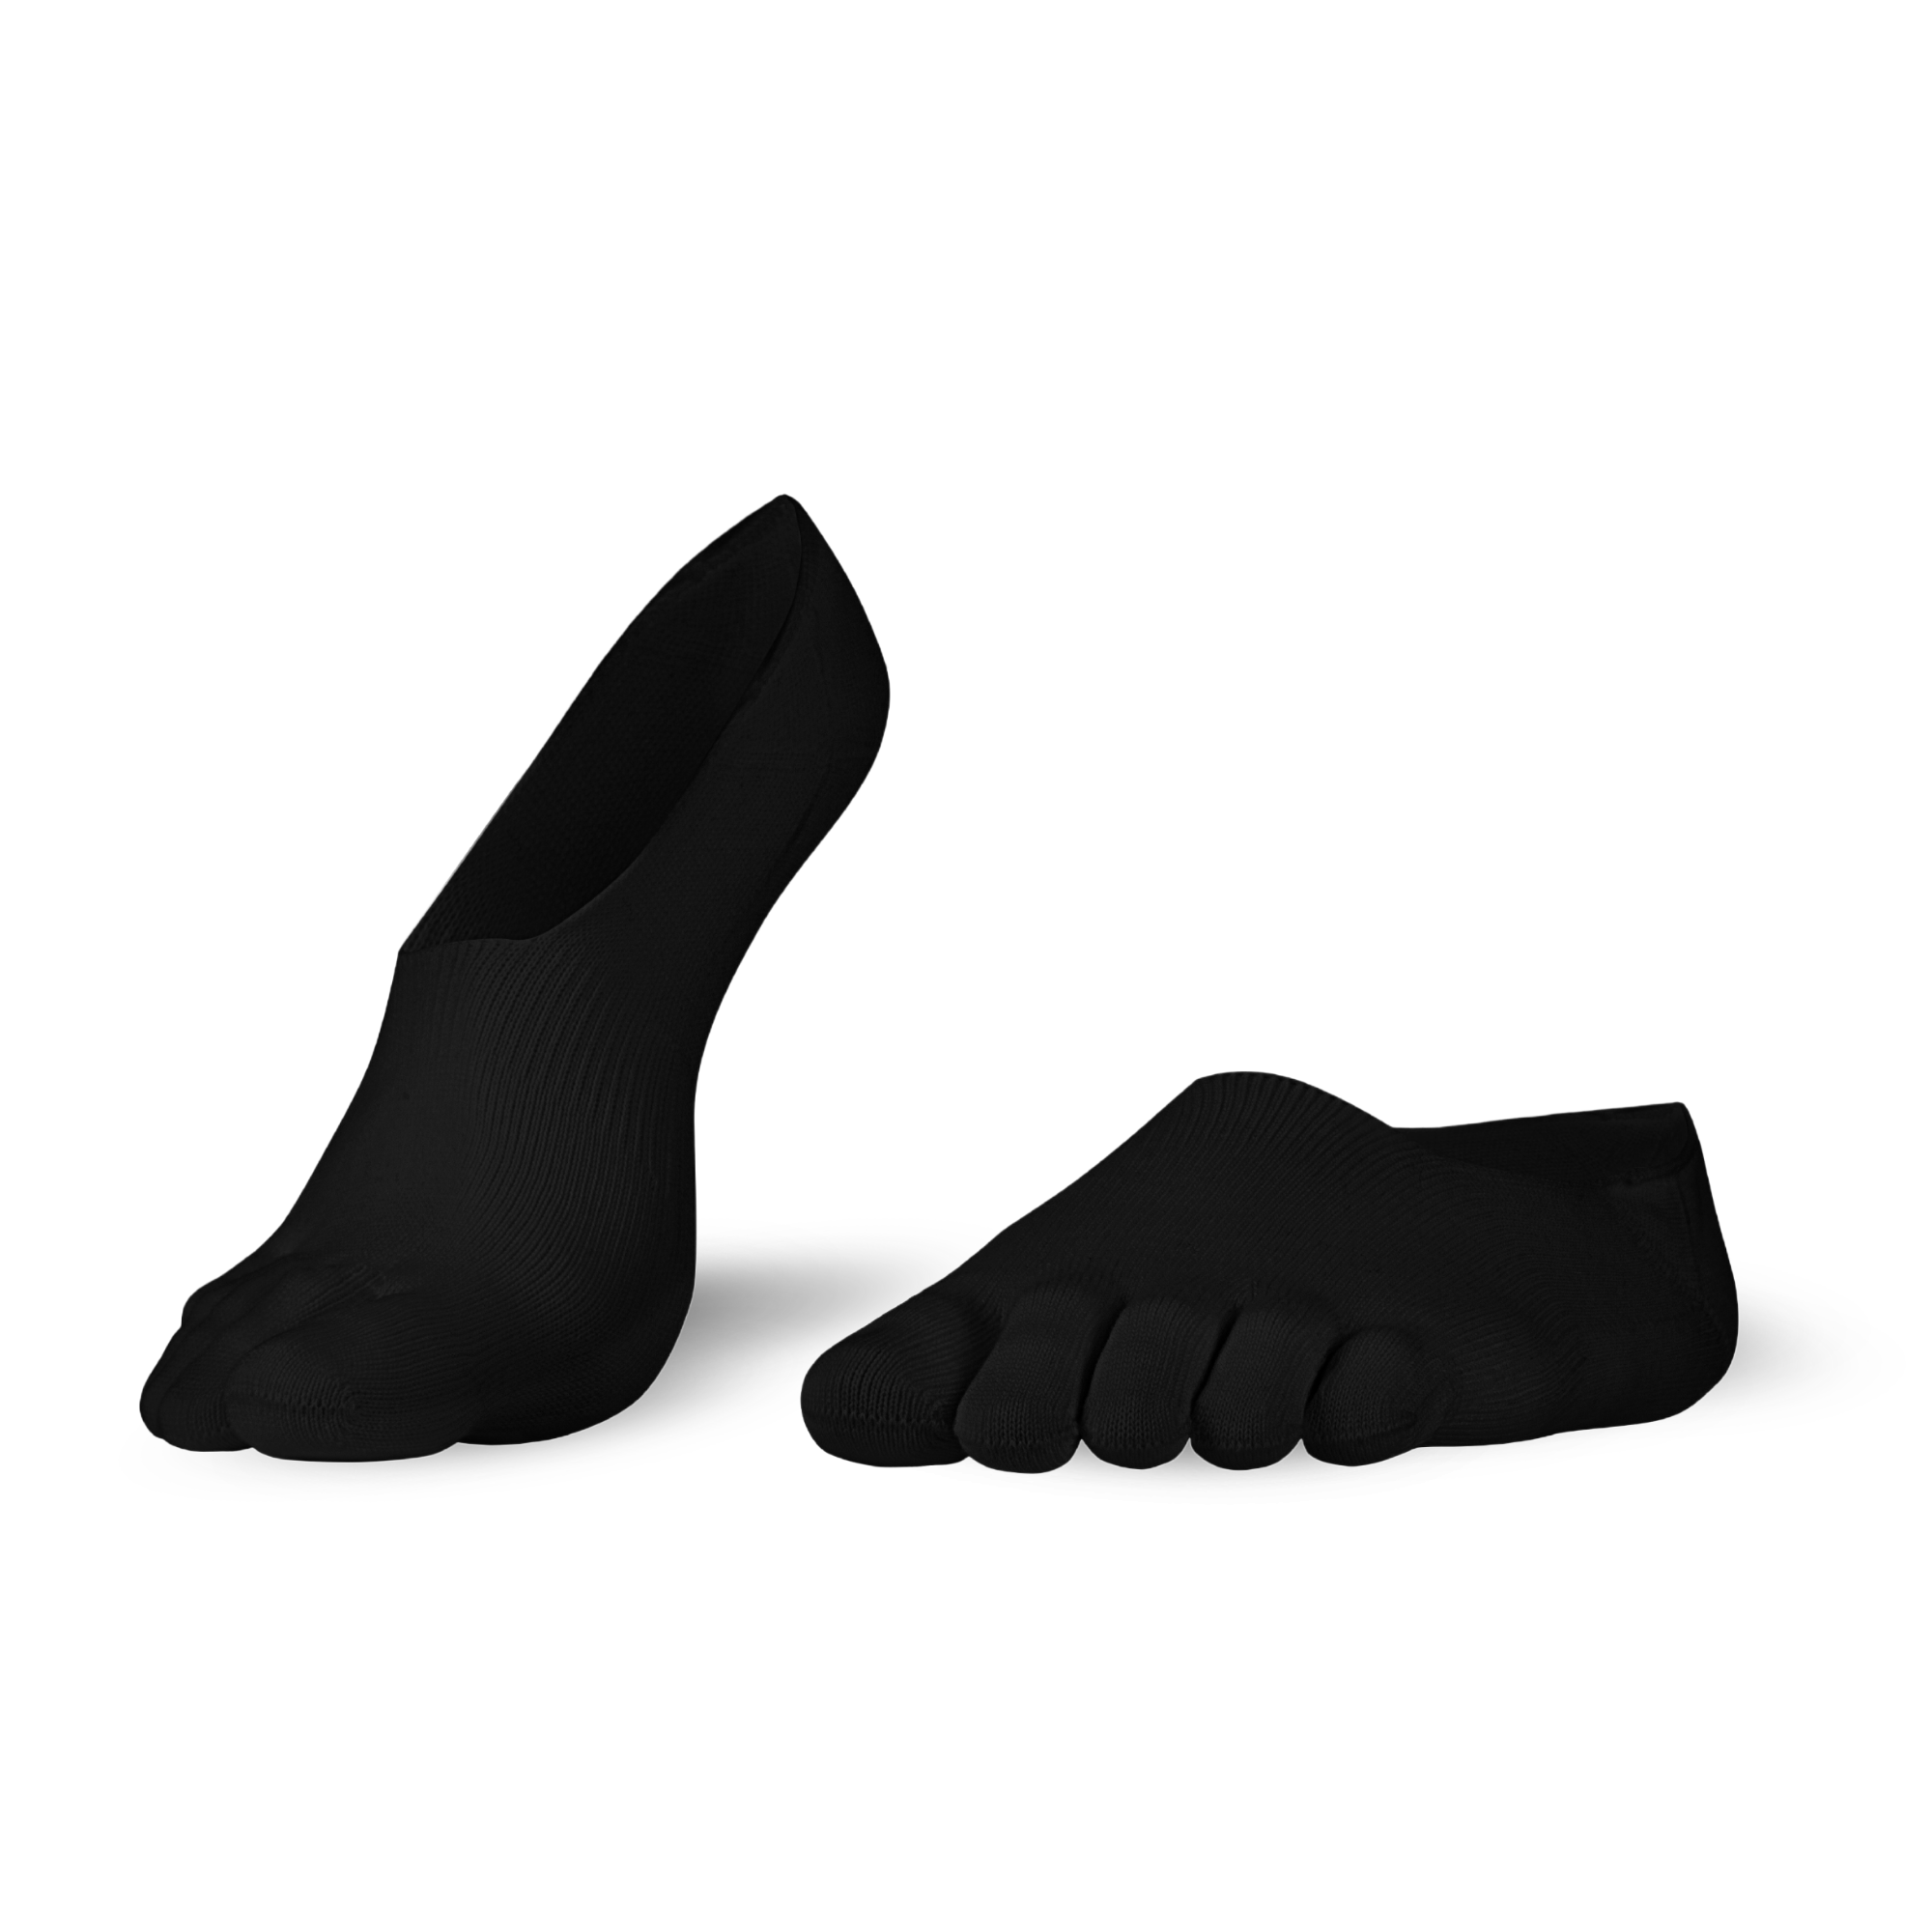 Outdoor toe socks - Knitido®